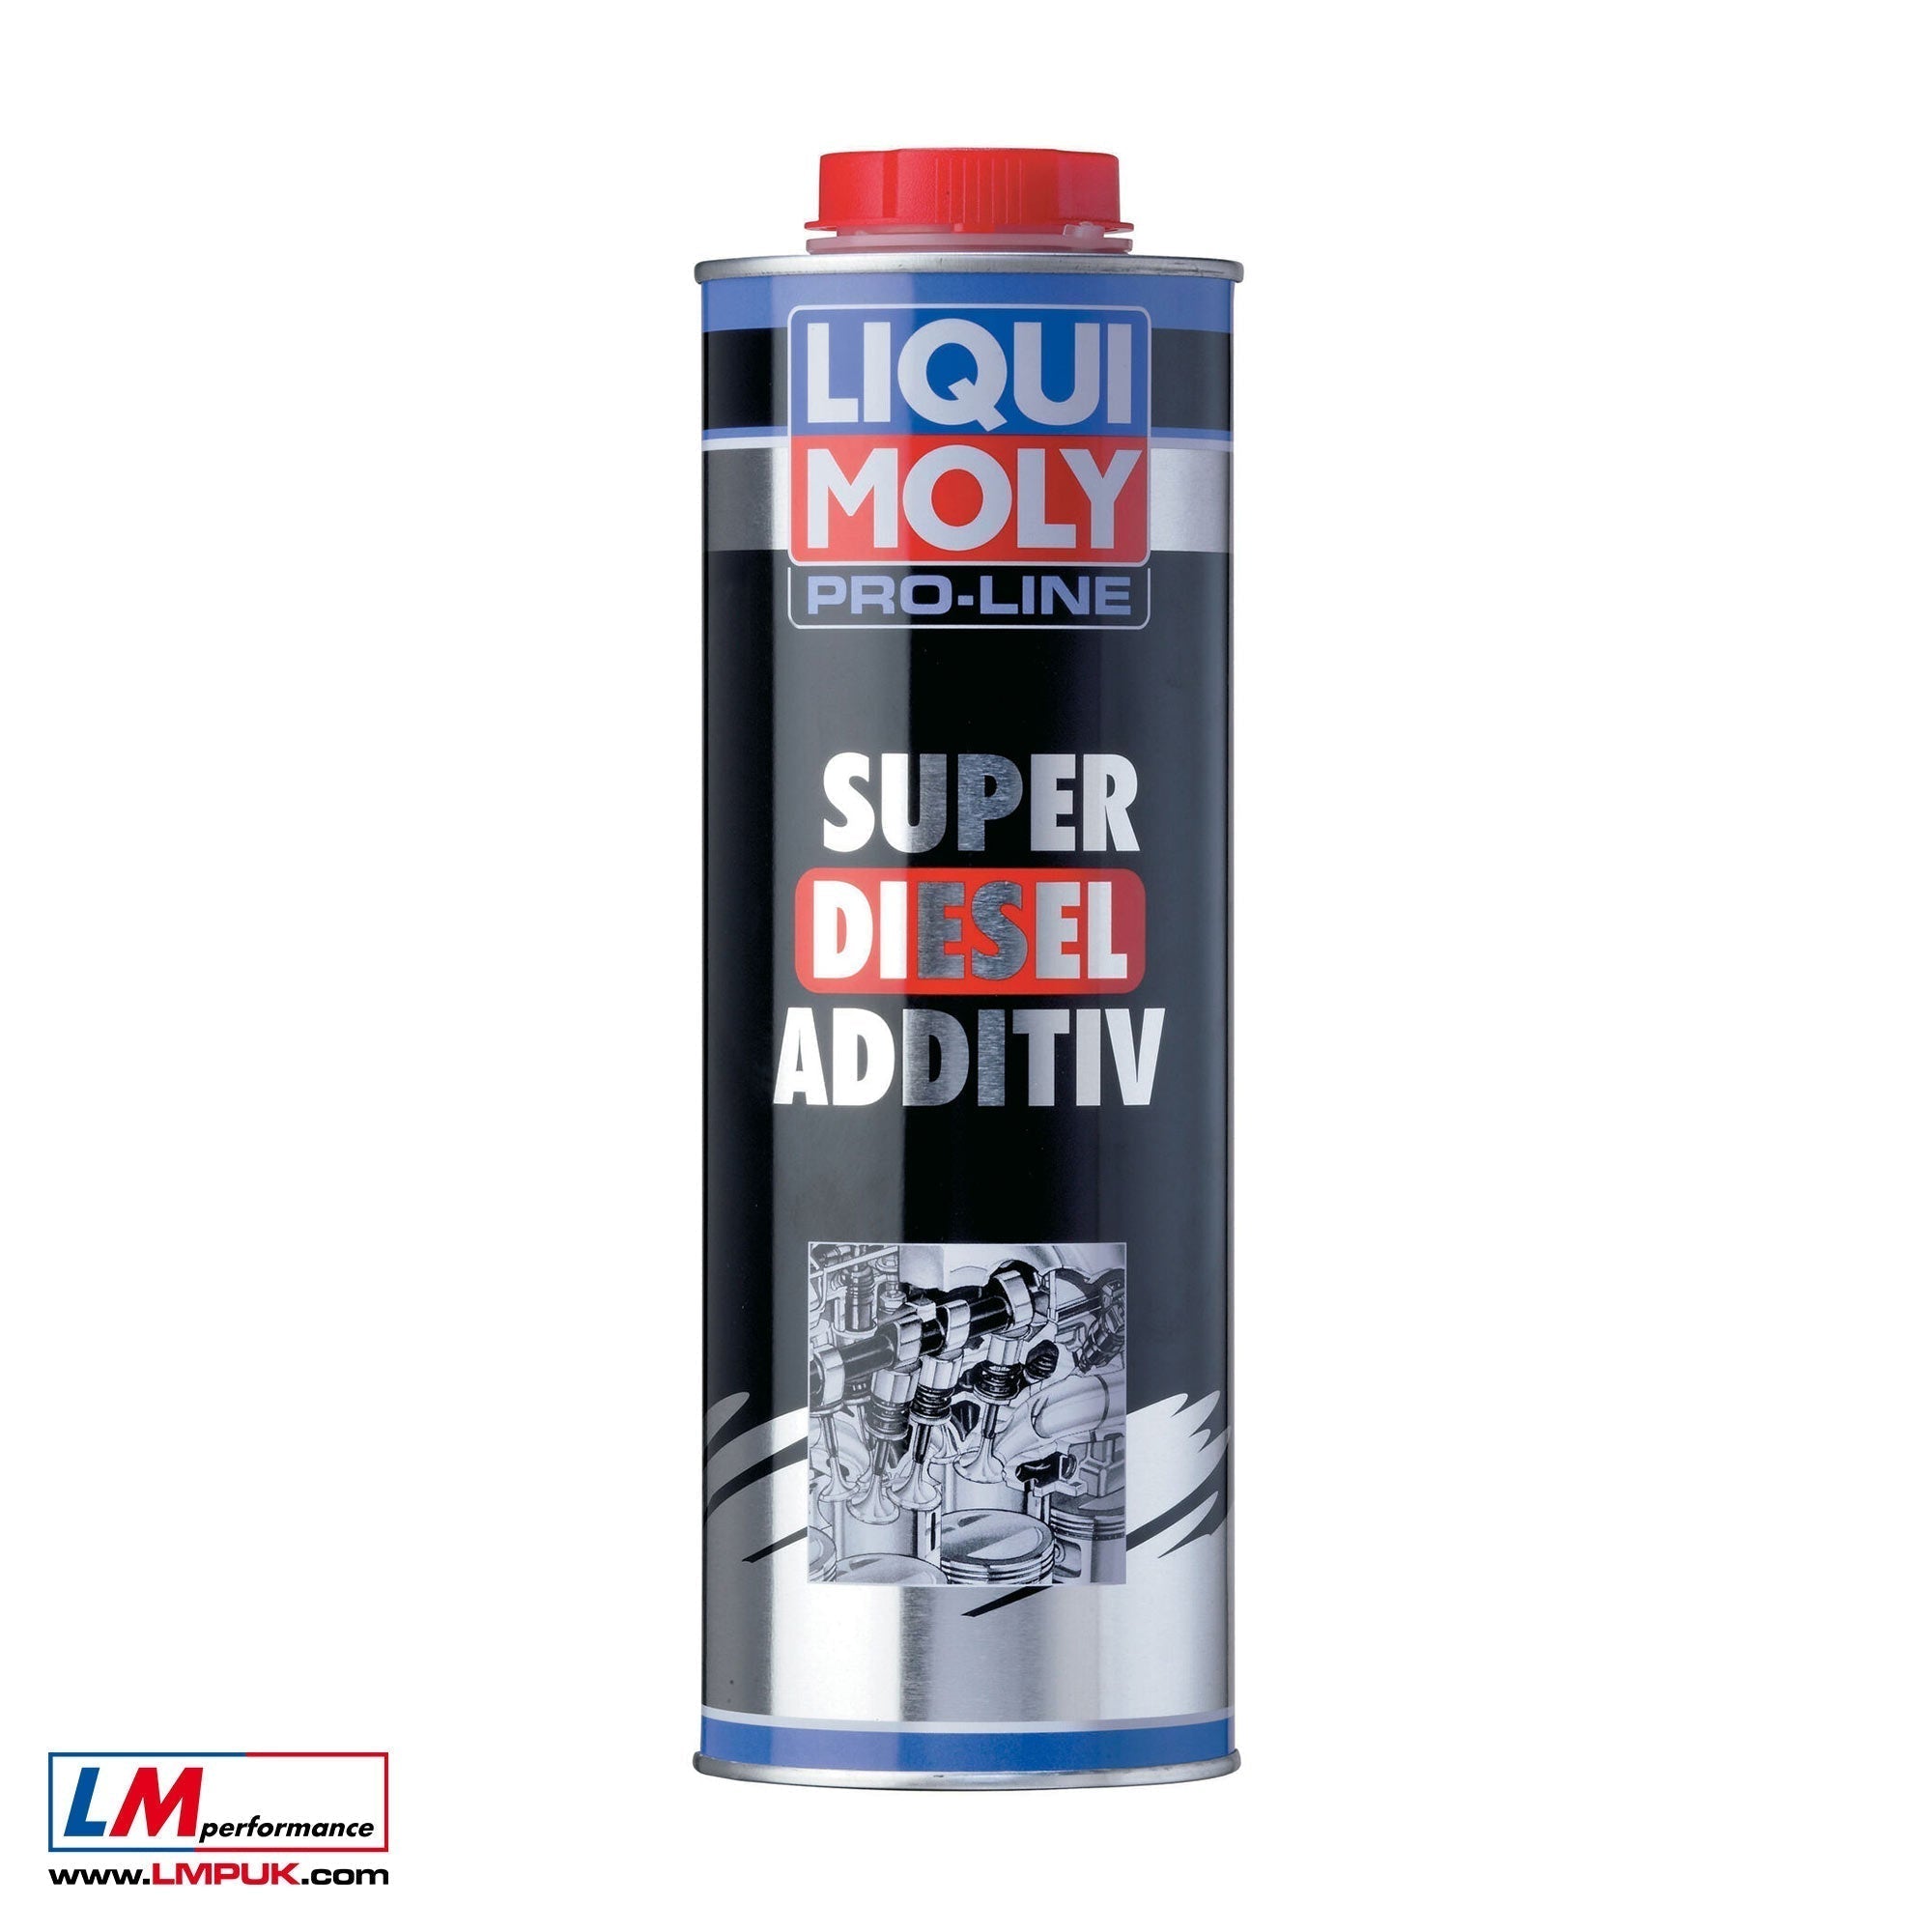  Liqui-Moly Diesel Lubricity Additive